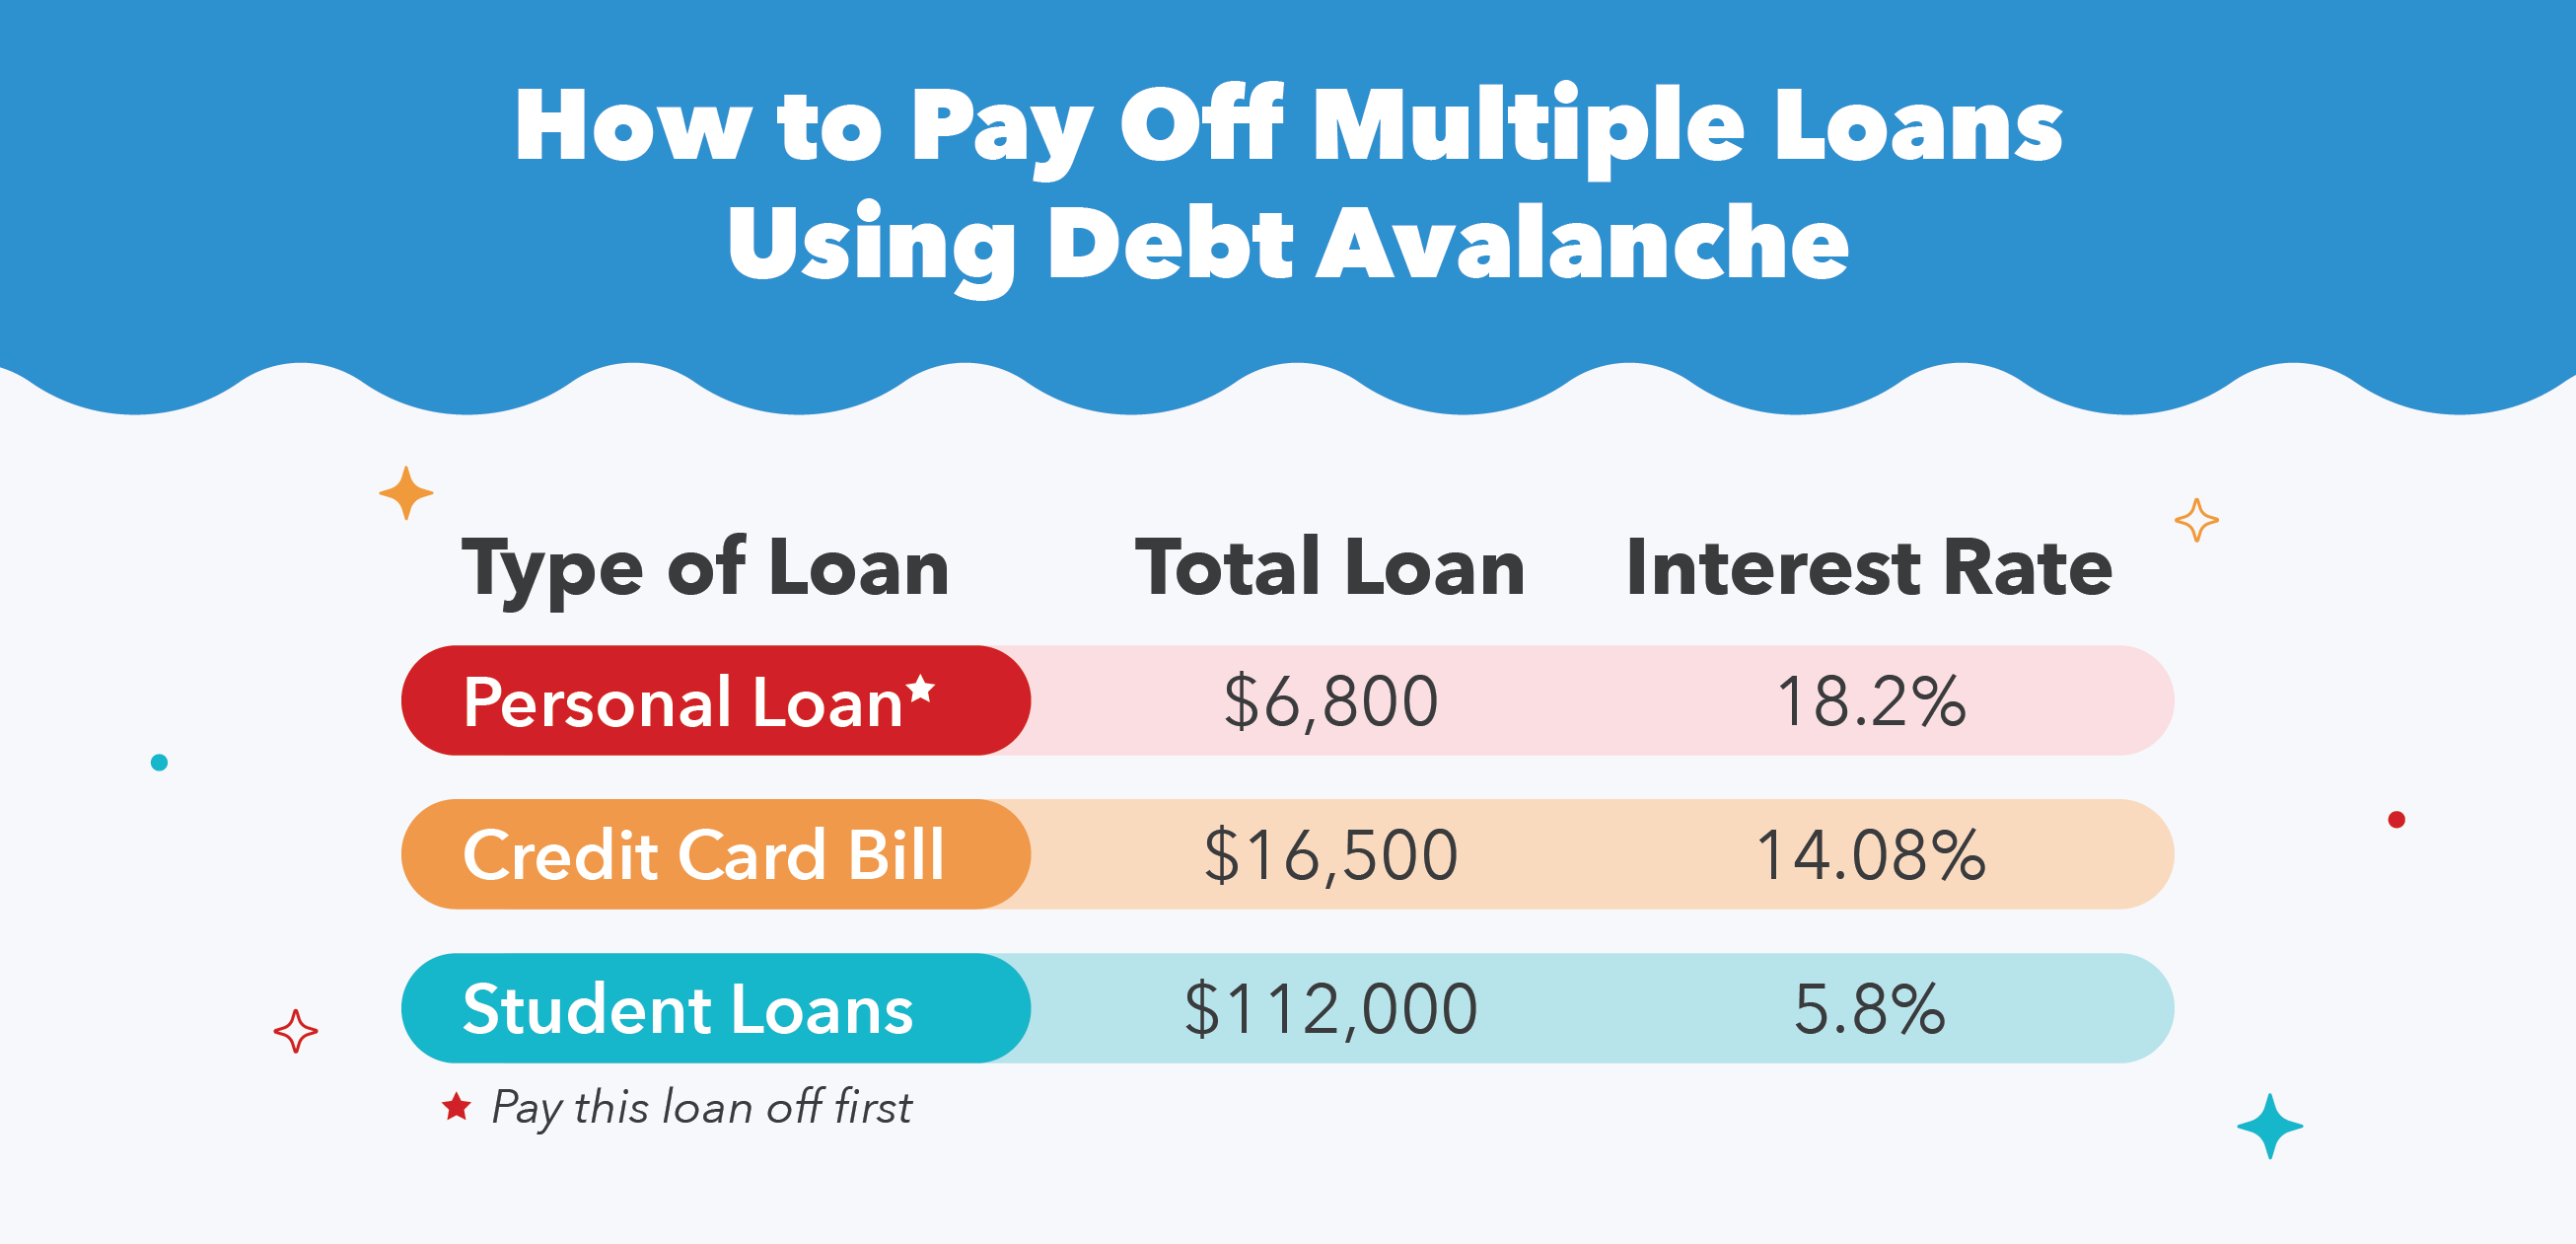 The debt avalanche method